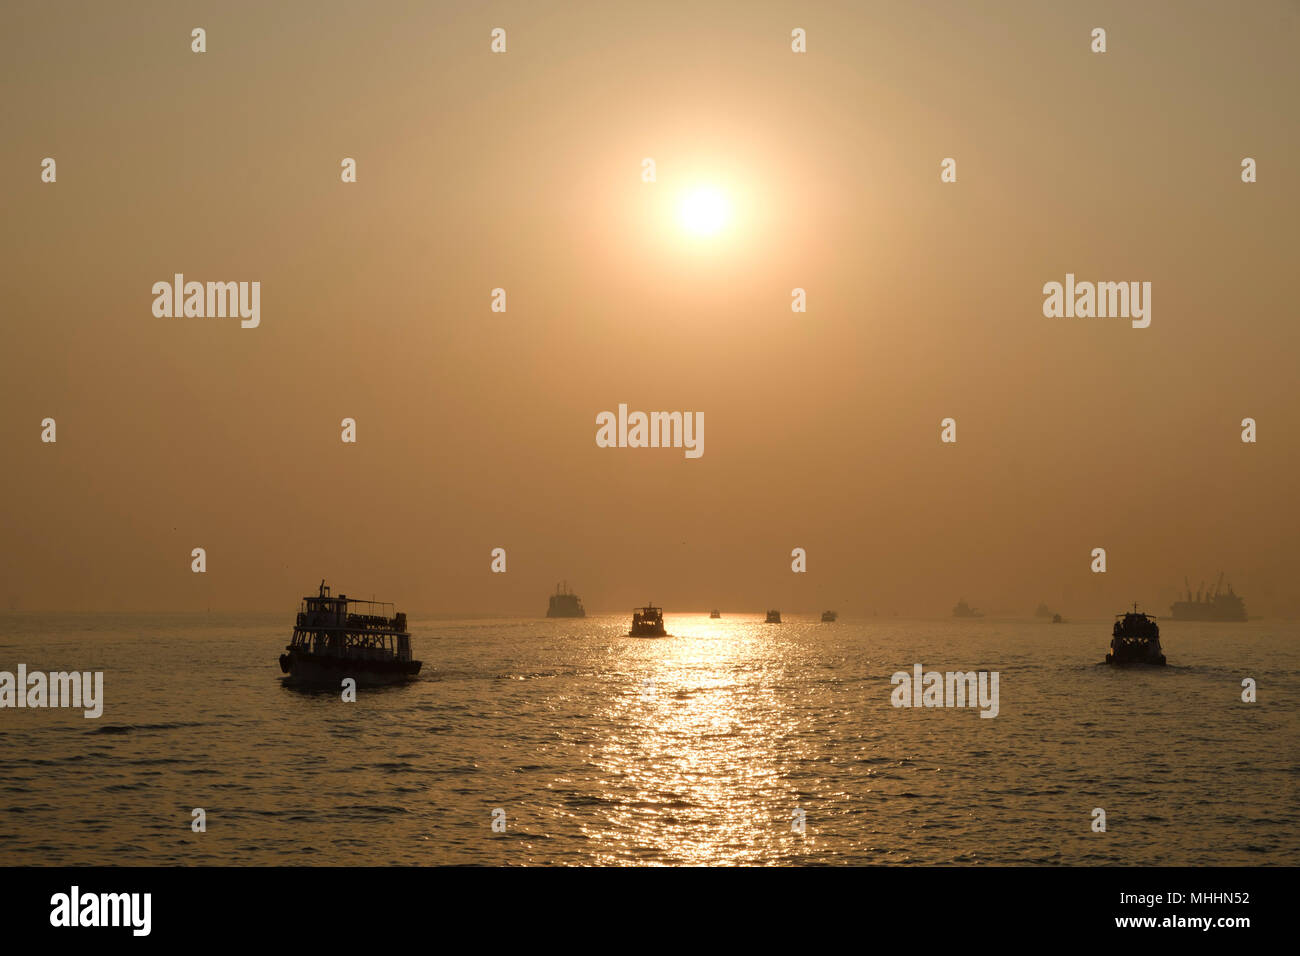 India - Mumbai. Ships in Mumbai harbour at sunset. Stock Photo